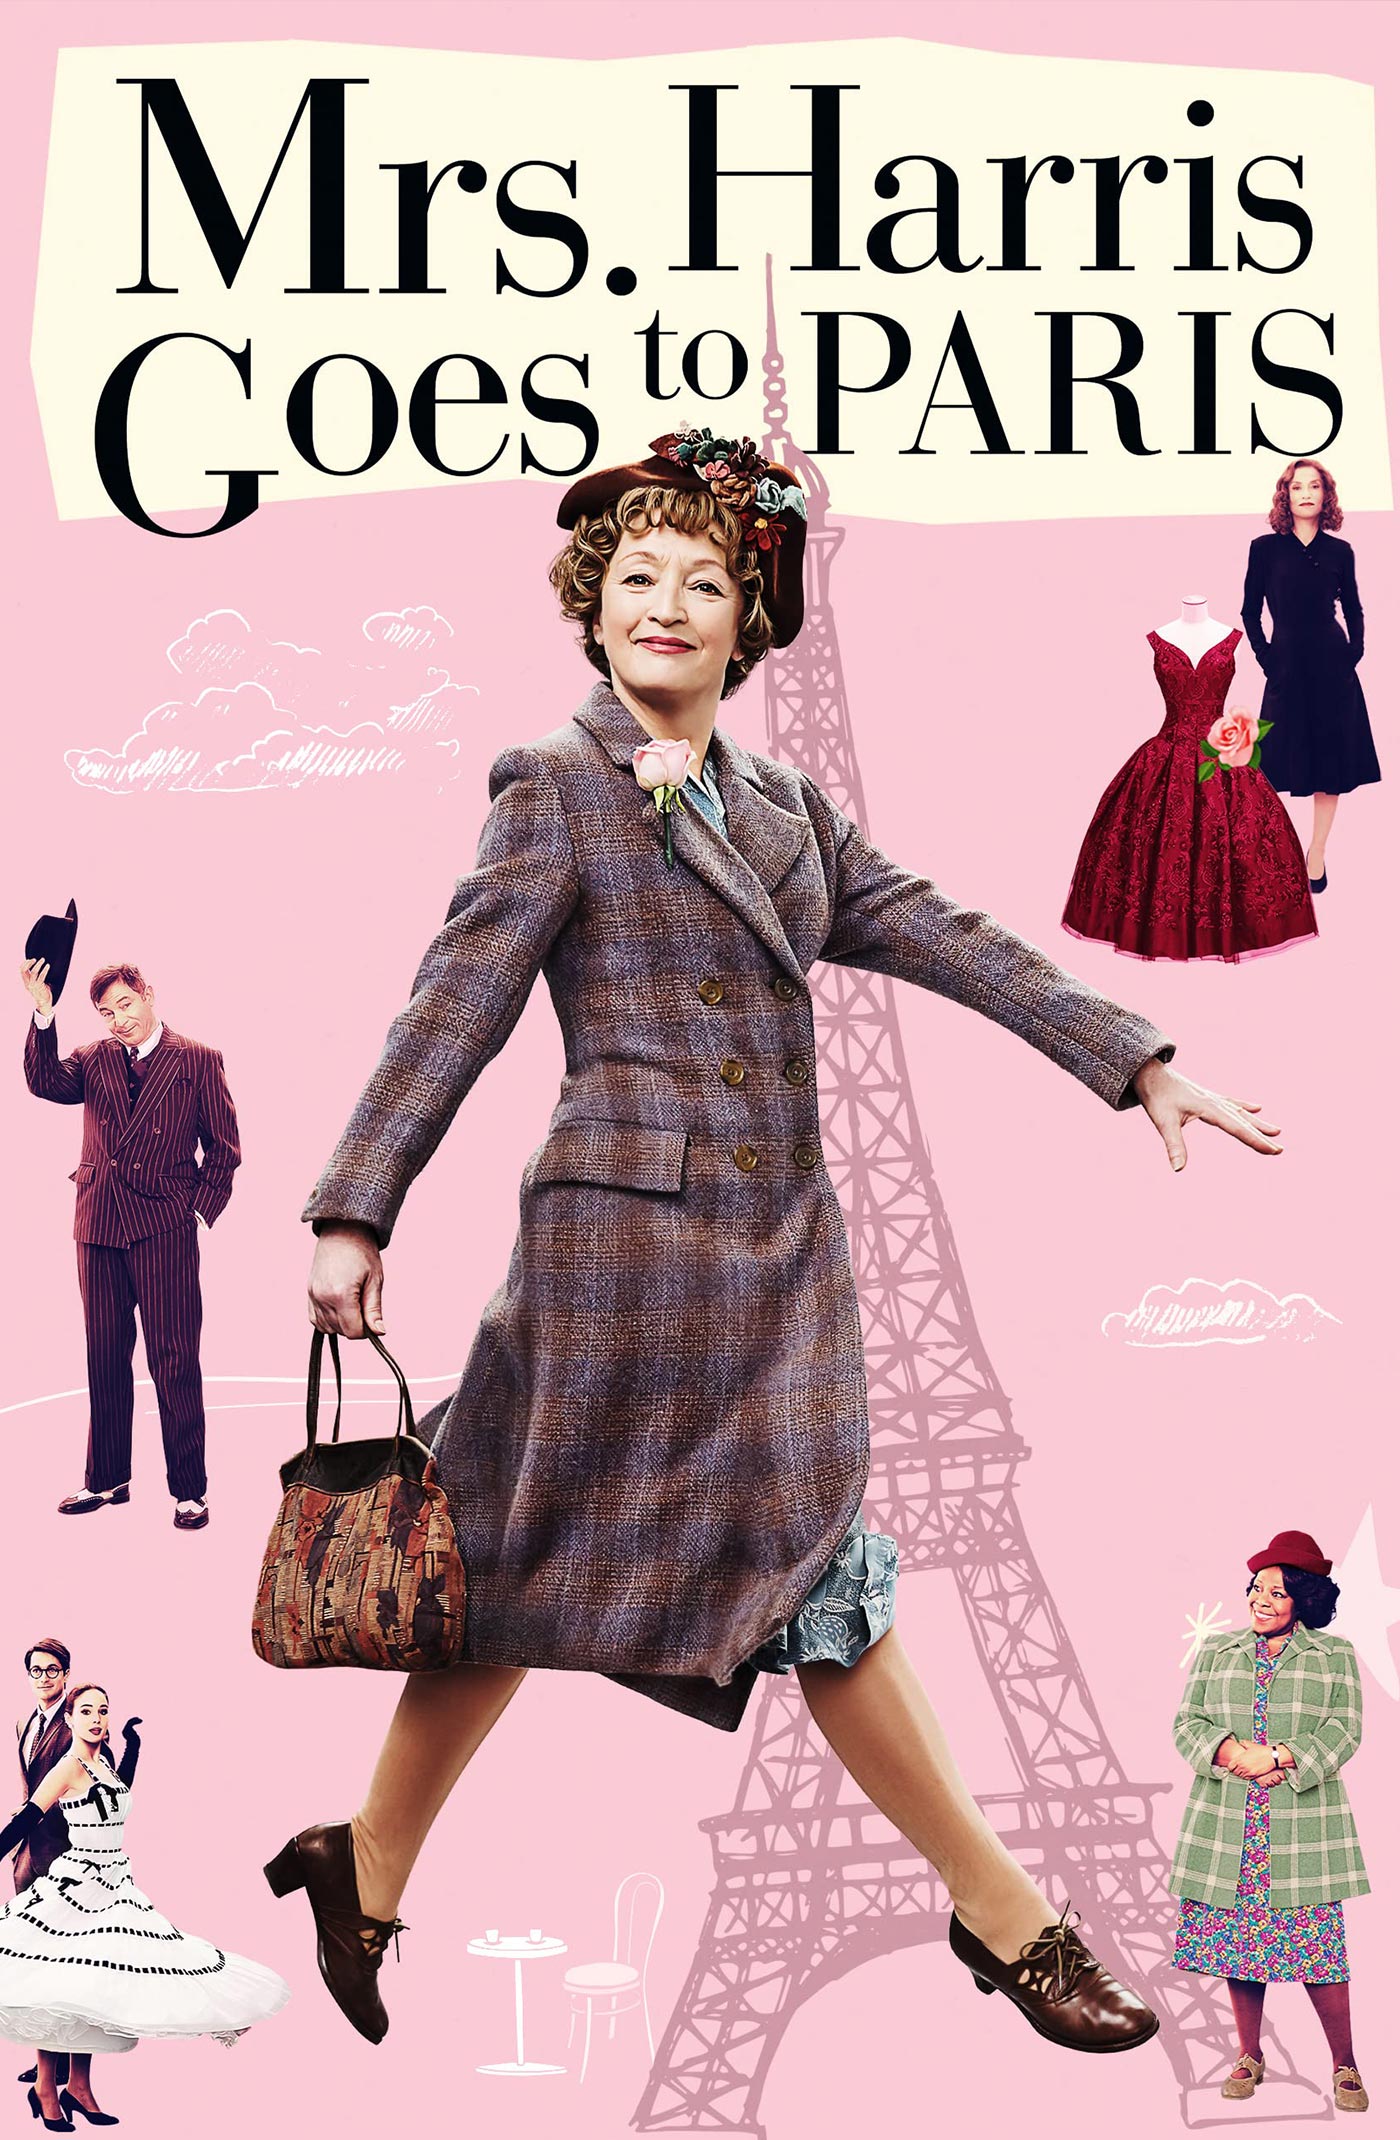 Mrs Harris goes Paris